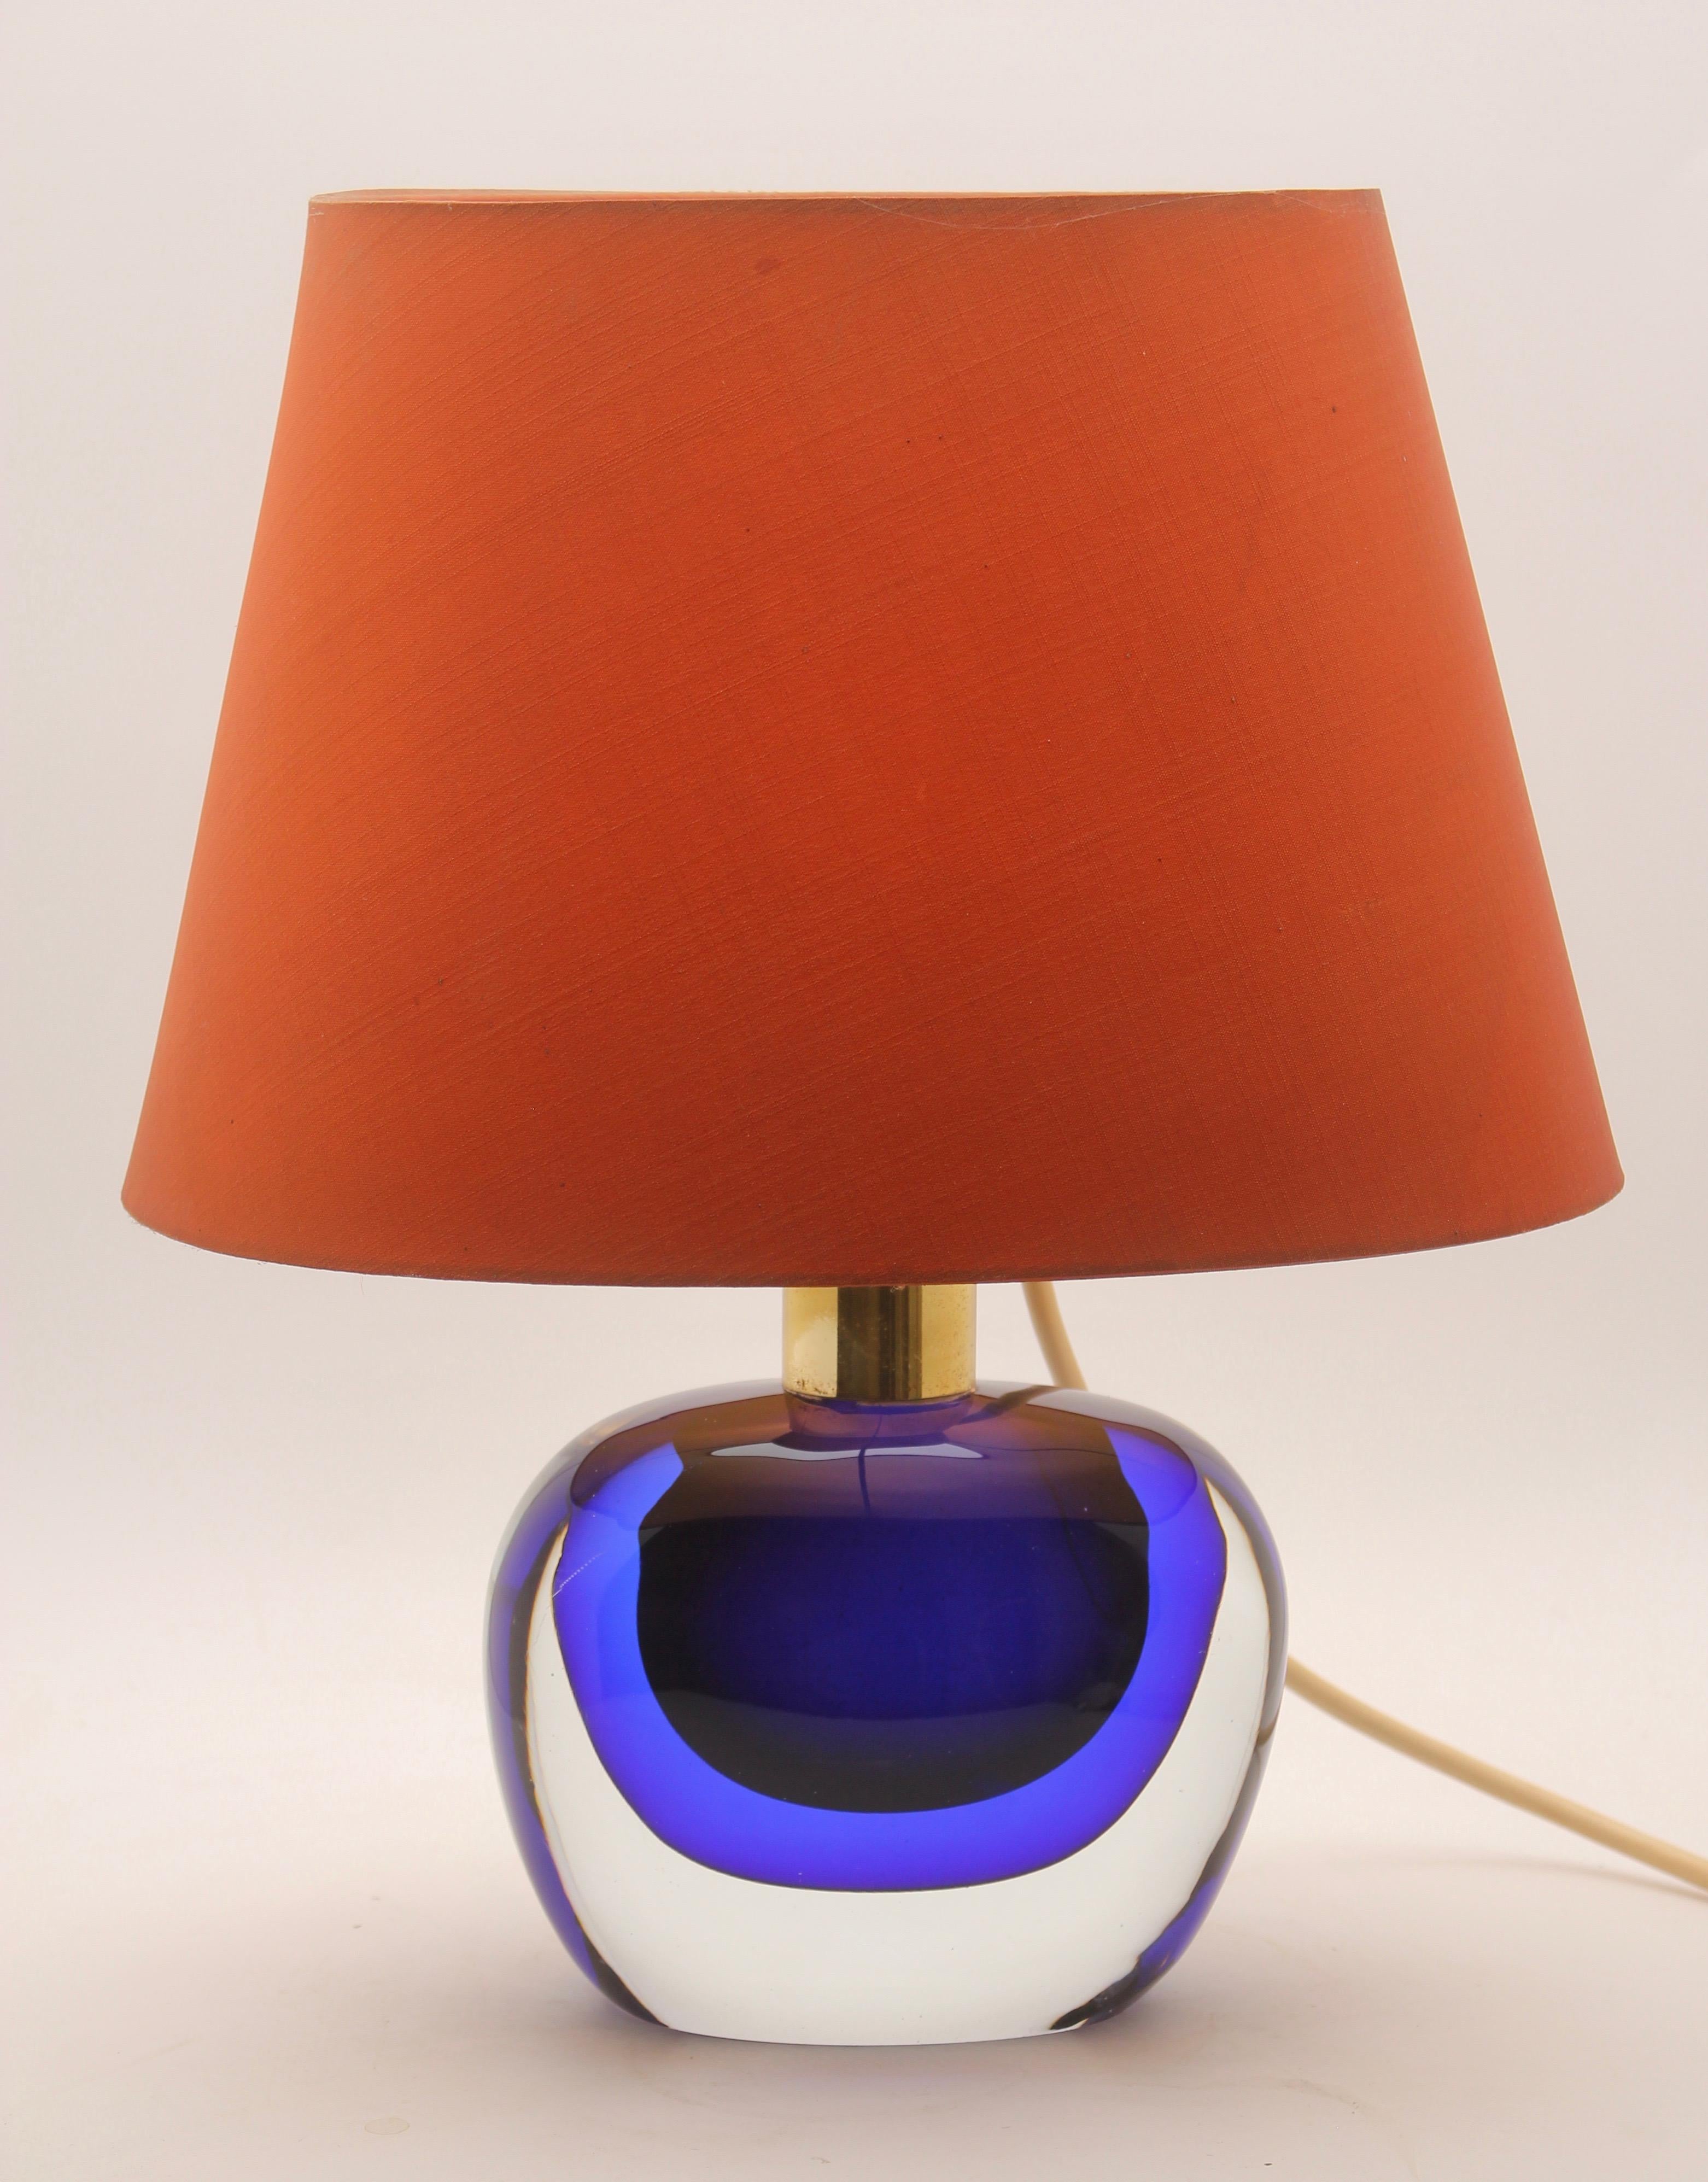 Murano Globe-Shaped Lamp Cobalt Blue with a Dramatic Jewel-Like Effect 1